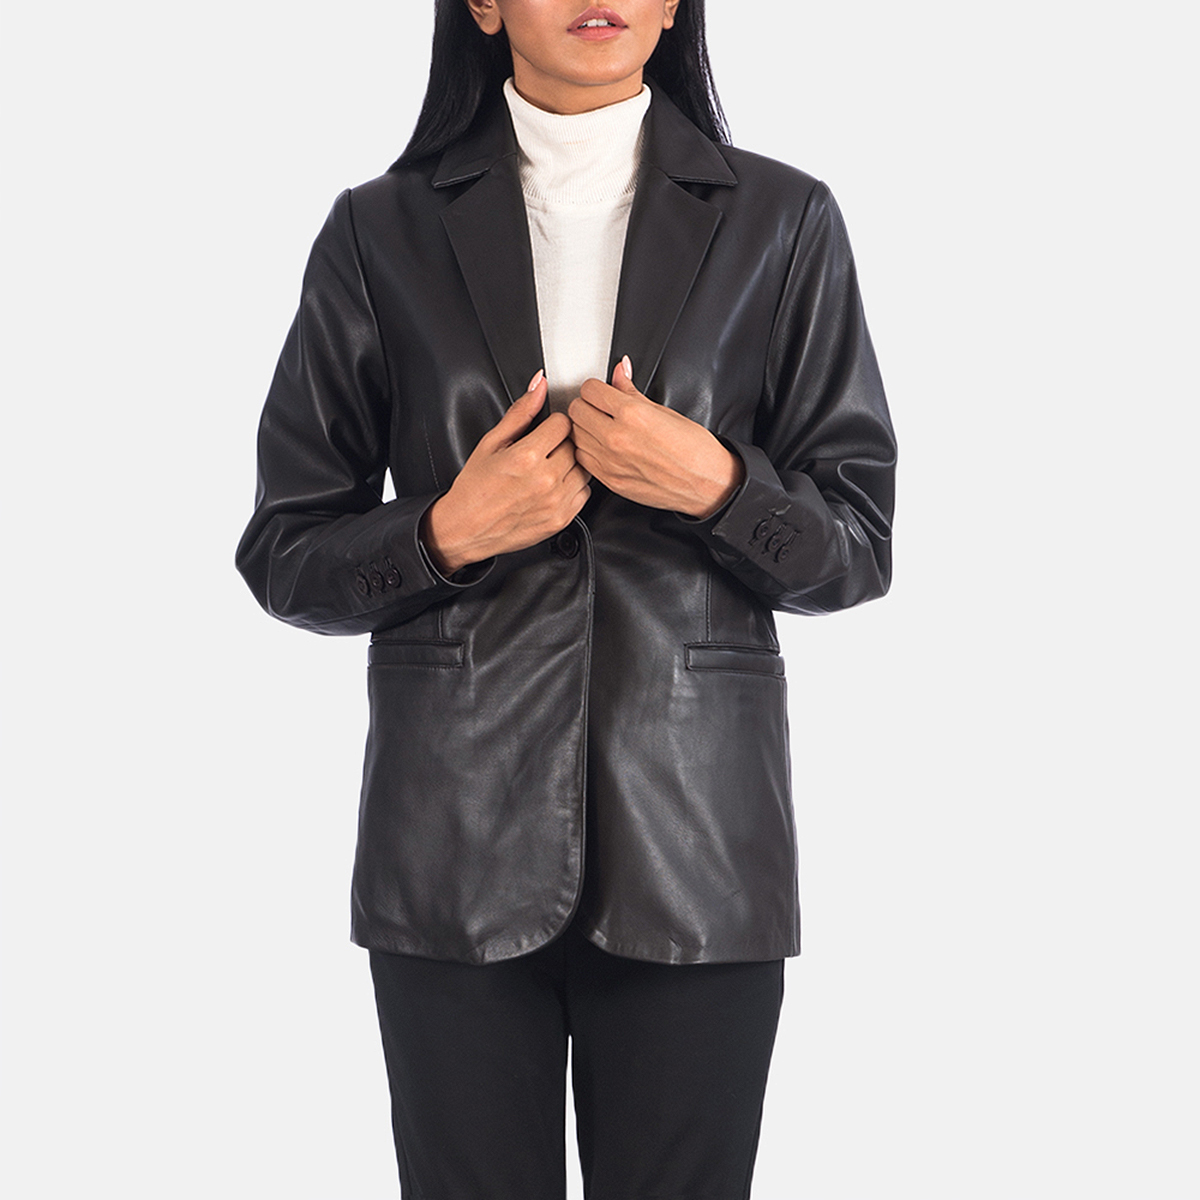 The Jacket Maker Size M black leather jacket | Leather jacket, Jackets,  Black leather jacket